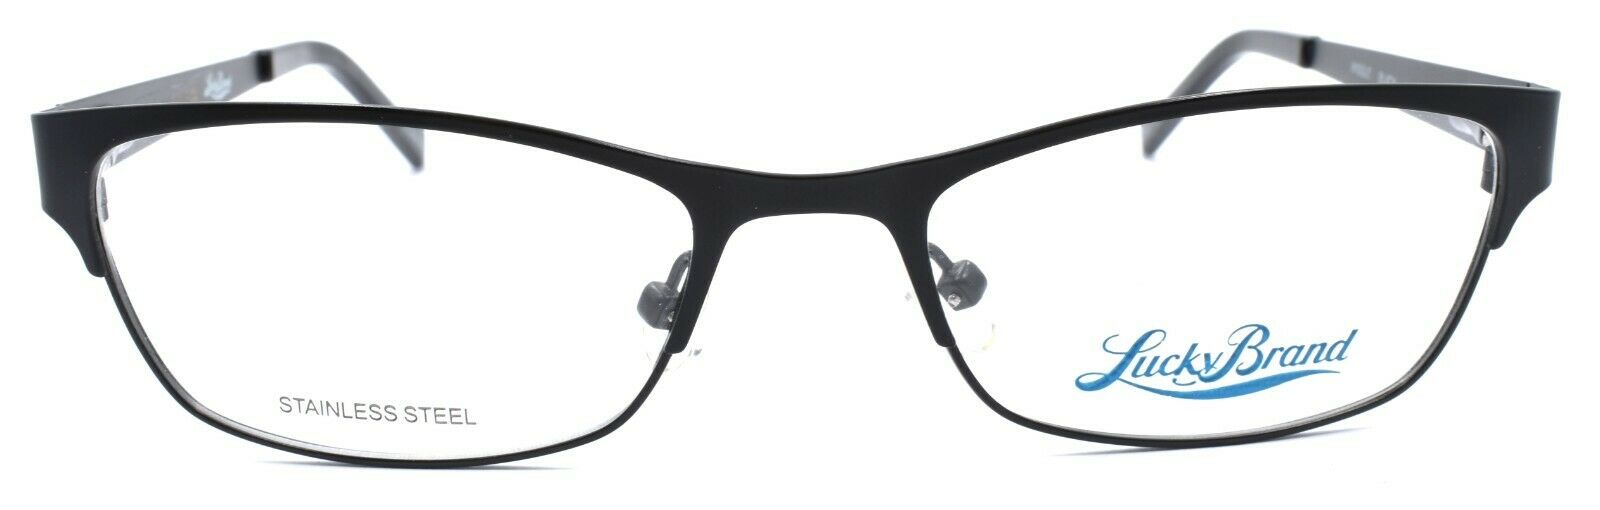 2-LUCKY BRAND Wiggle Kids Girls Eyeglasses Frames 49-17-130 Black + CASE-751286264074-IKSpecs